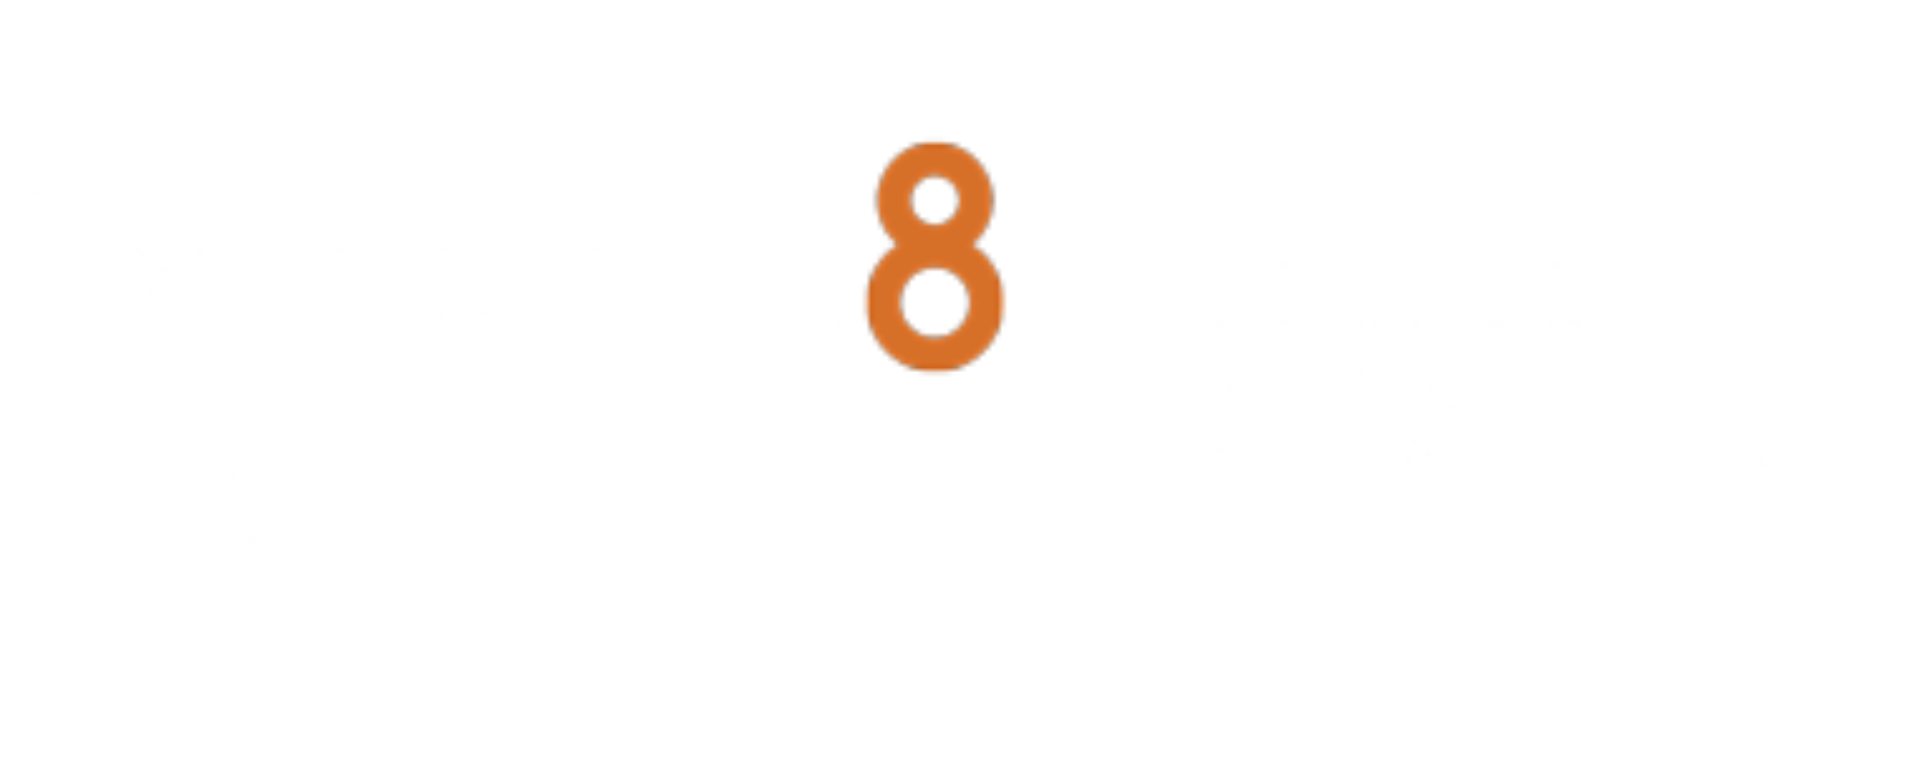 prophysics - Logo Force8